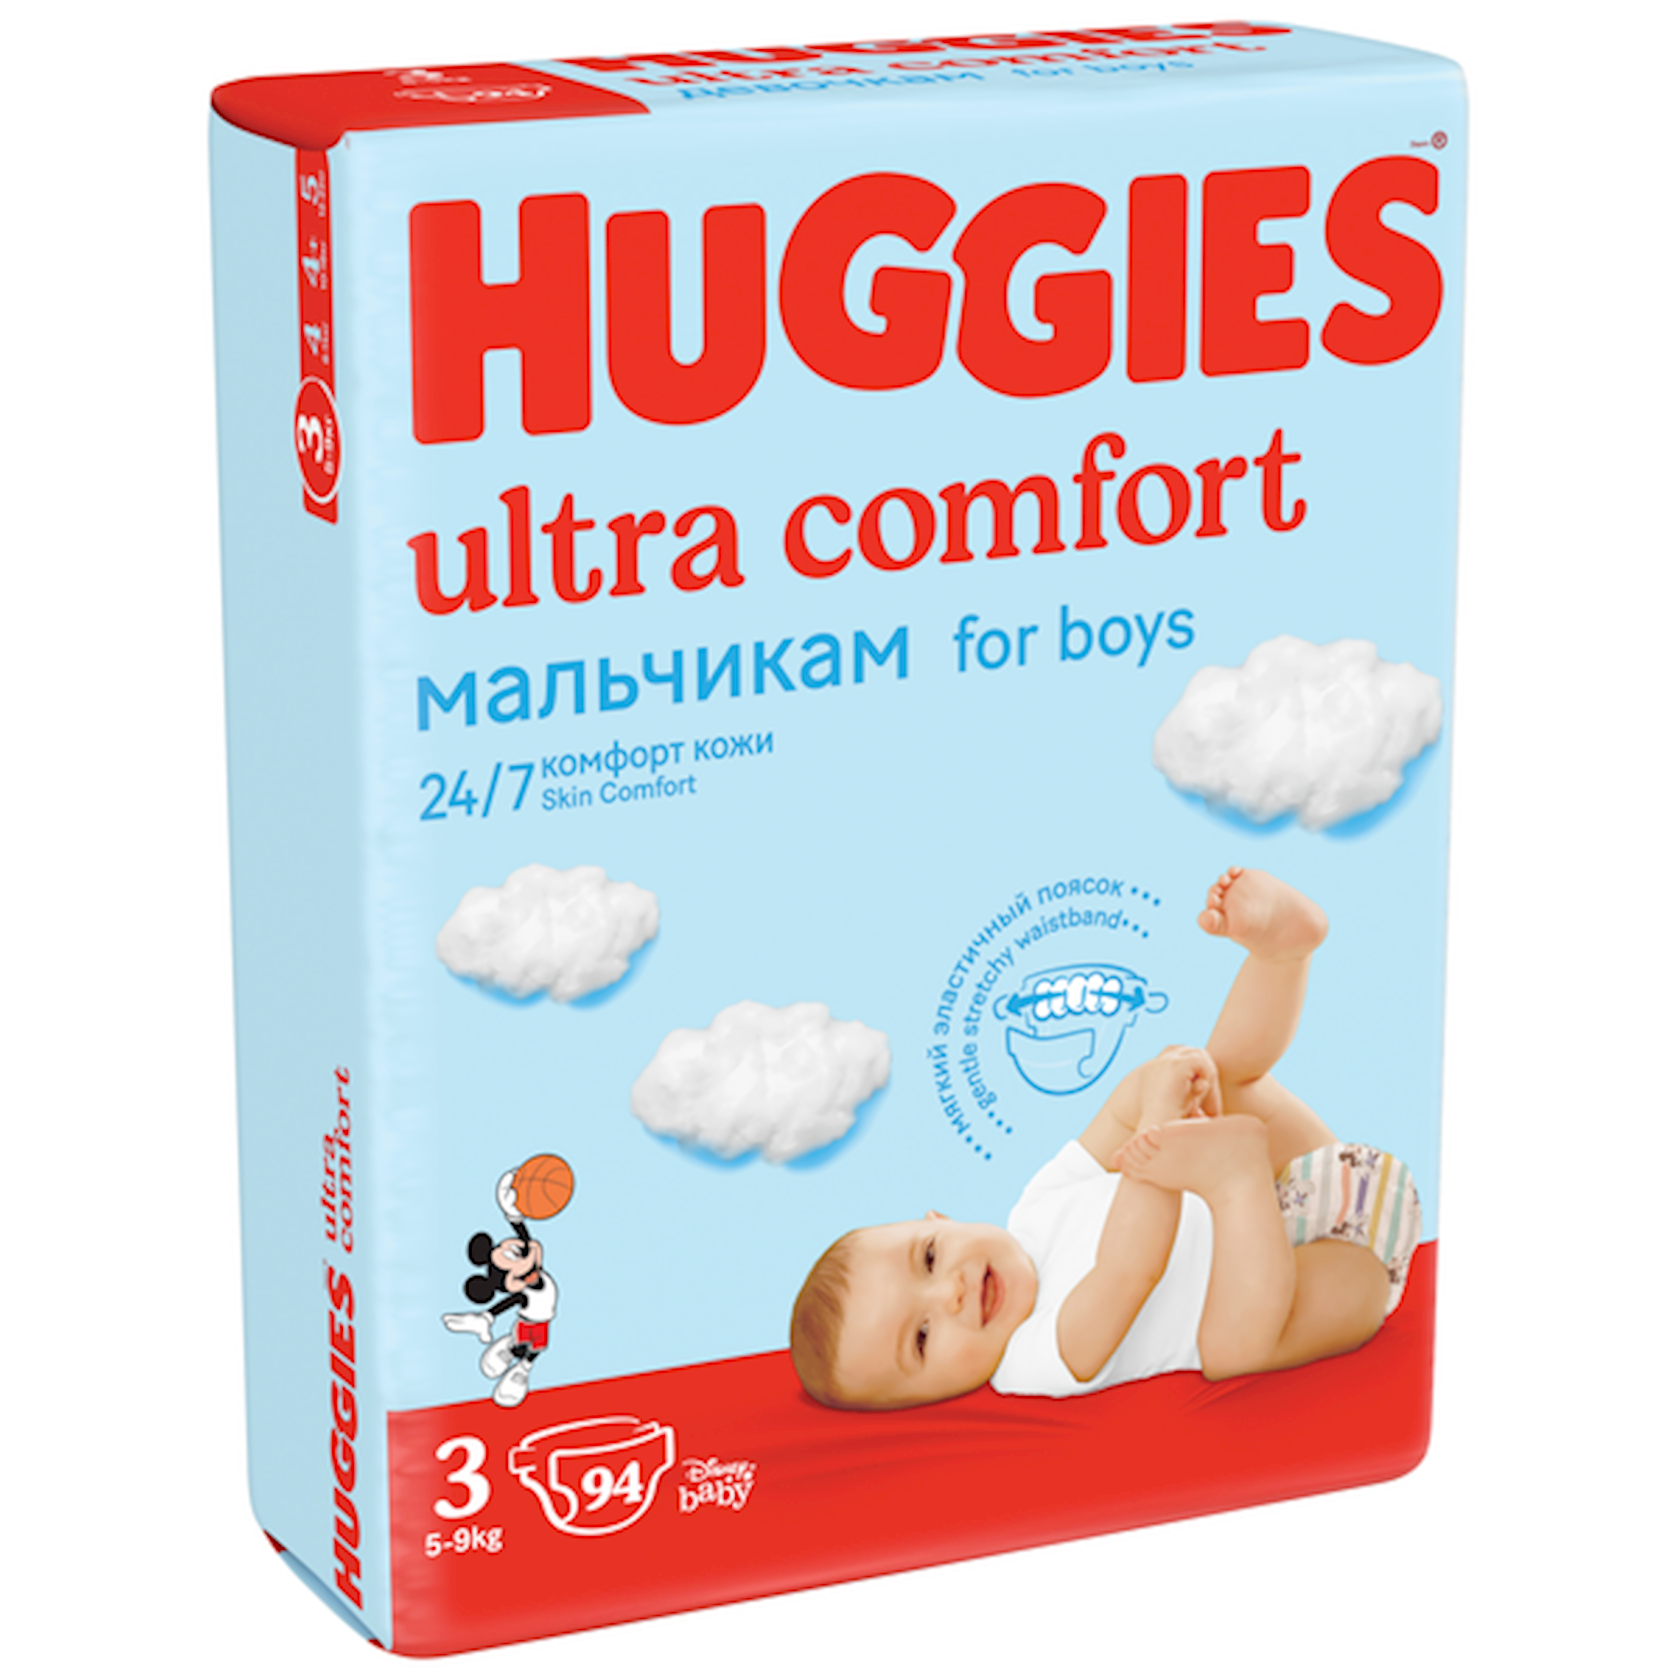 HUGGIES ULTRA COMFORT 3